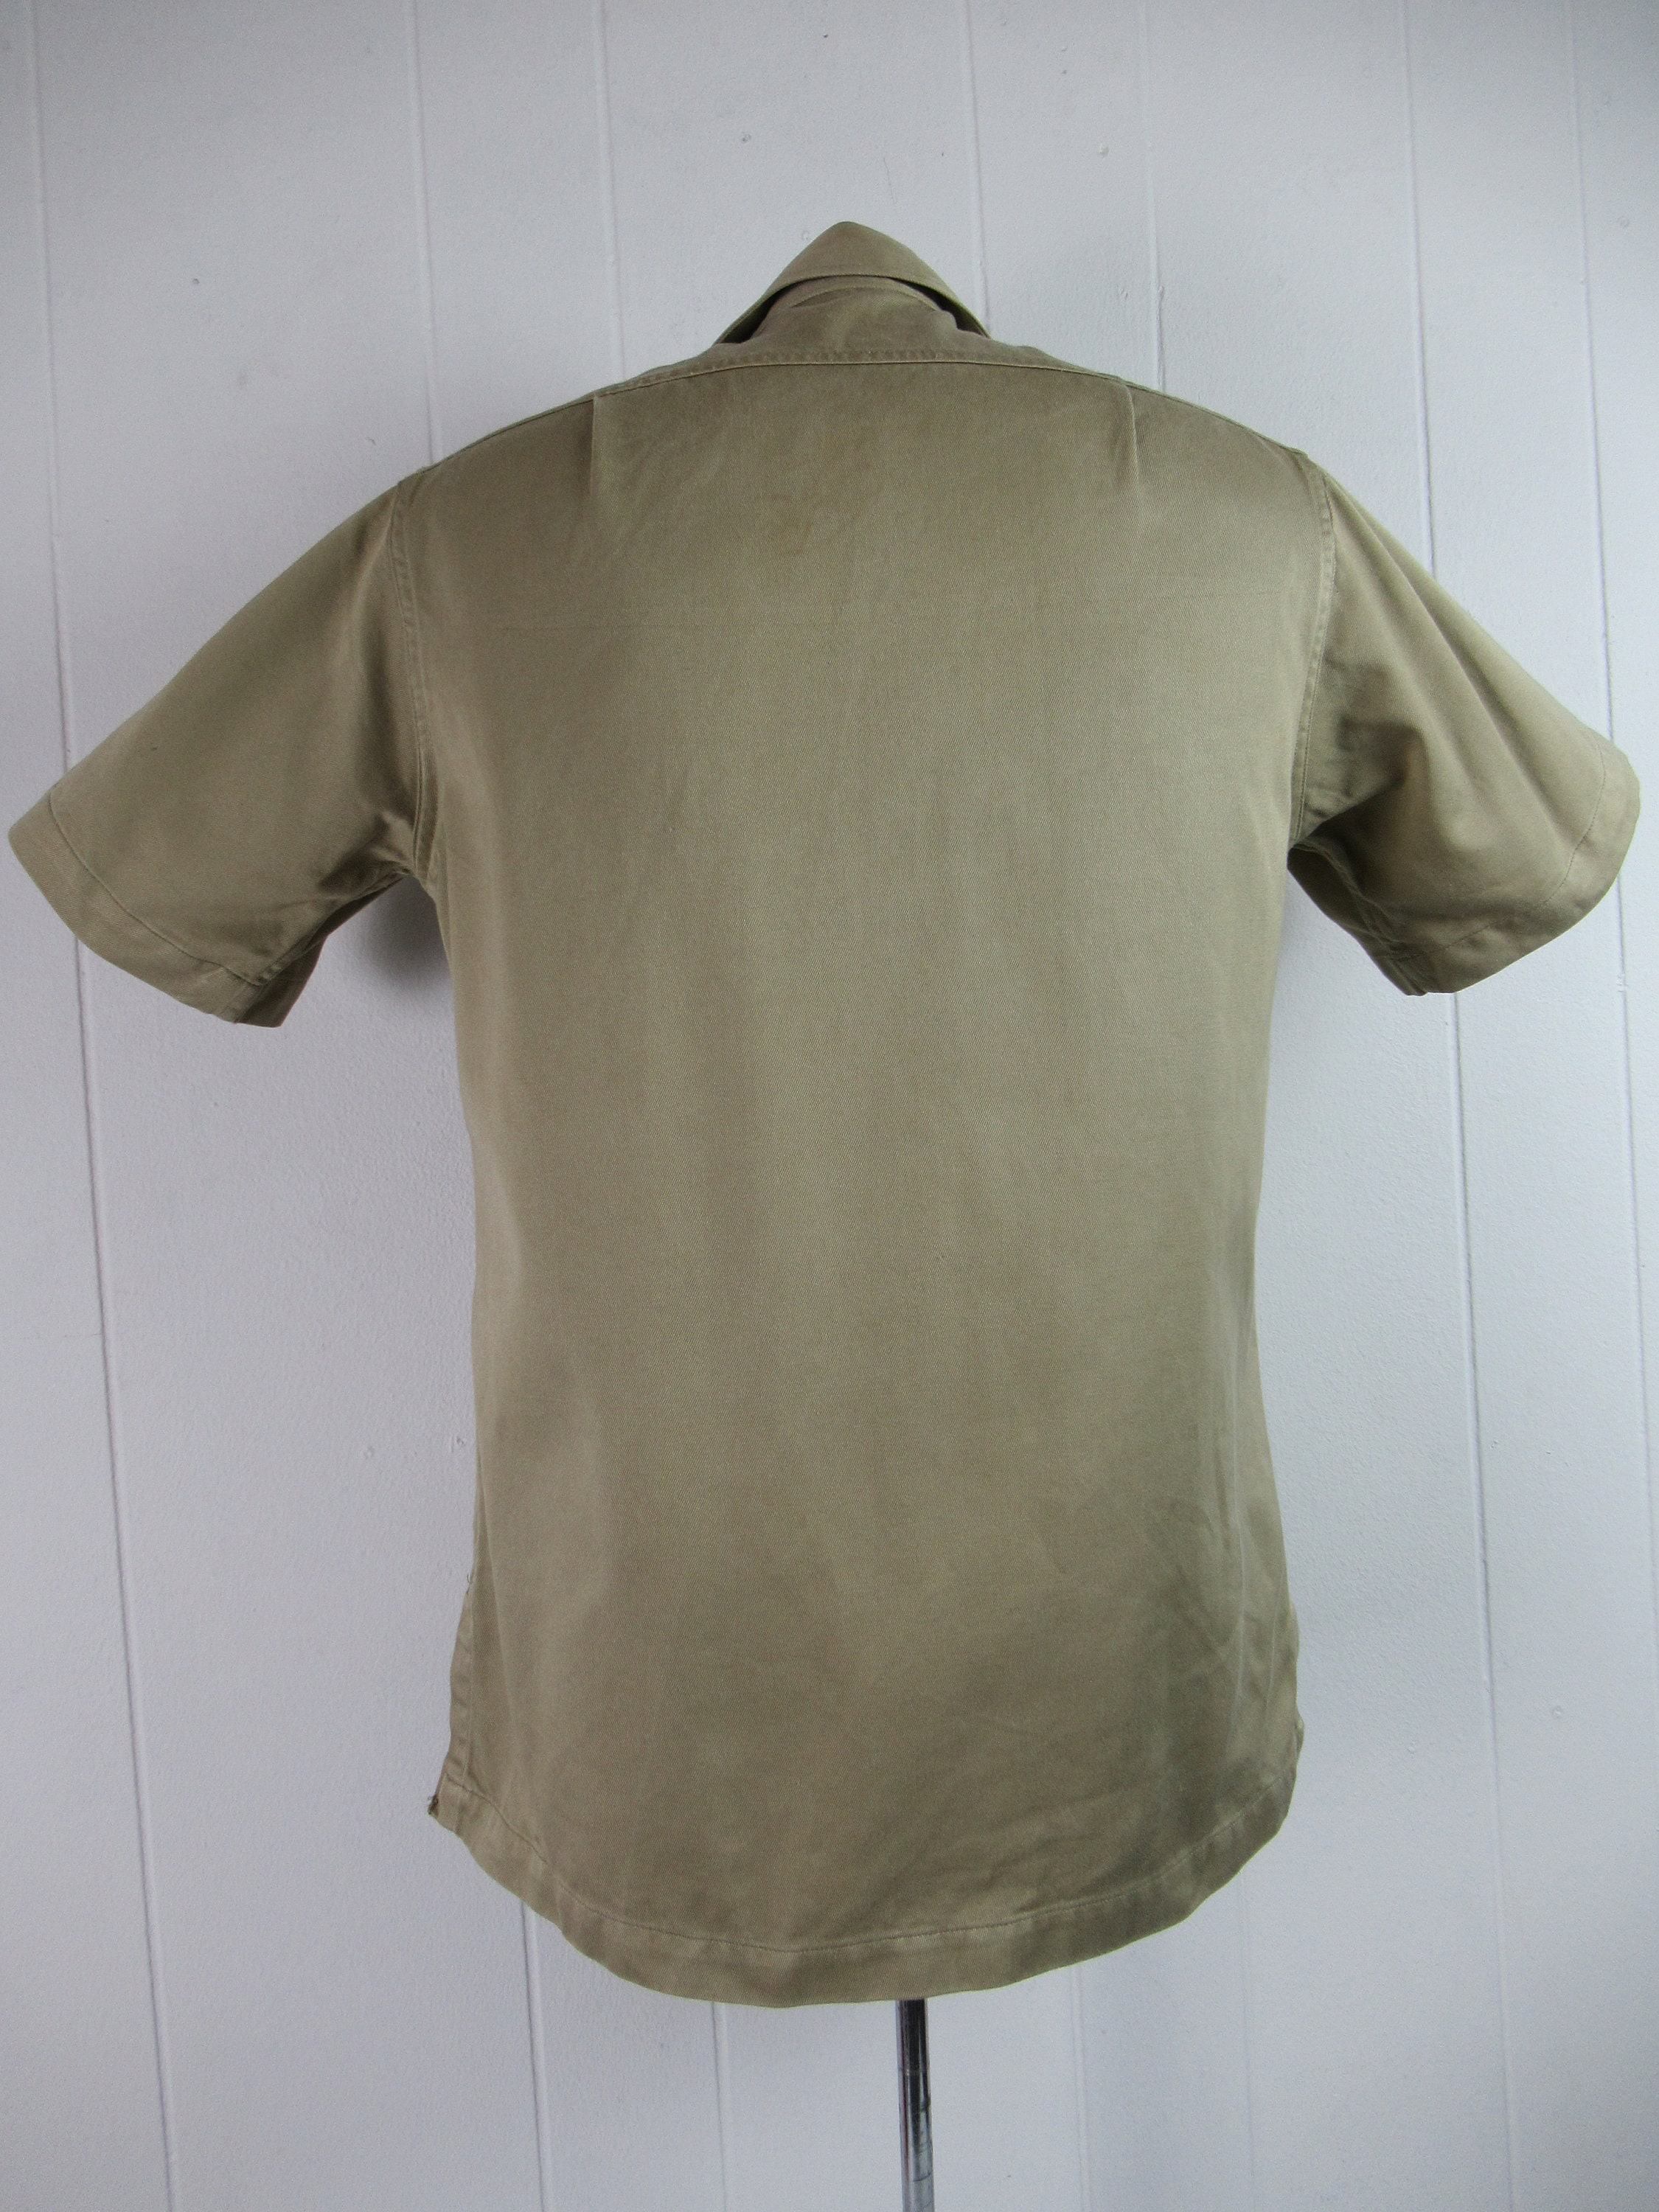 Vintage Shirt Military Shirt U.S. Army Shirt 1950s Shirt - Etsy